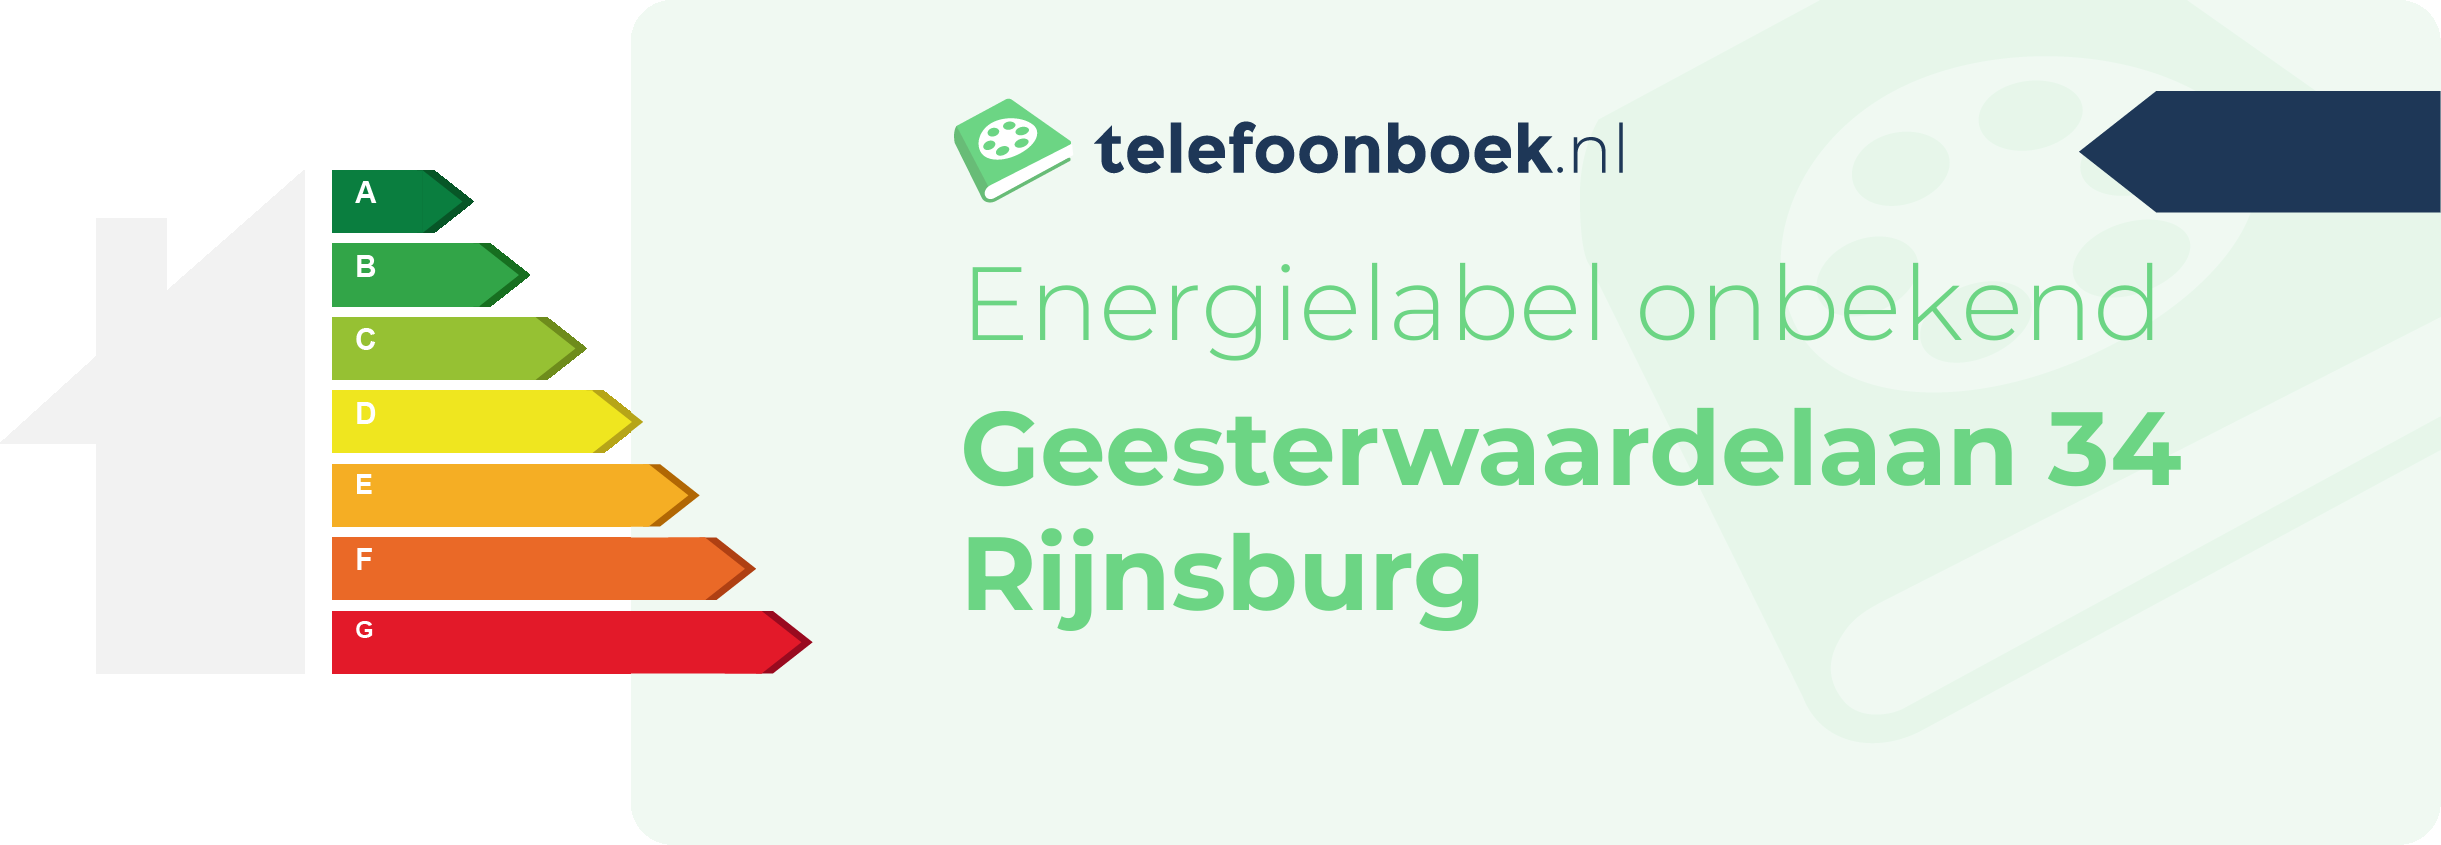 Energielabel Geesterwaardelaan 34 Rijnsburg